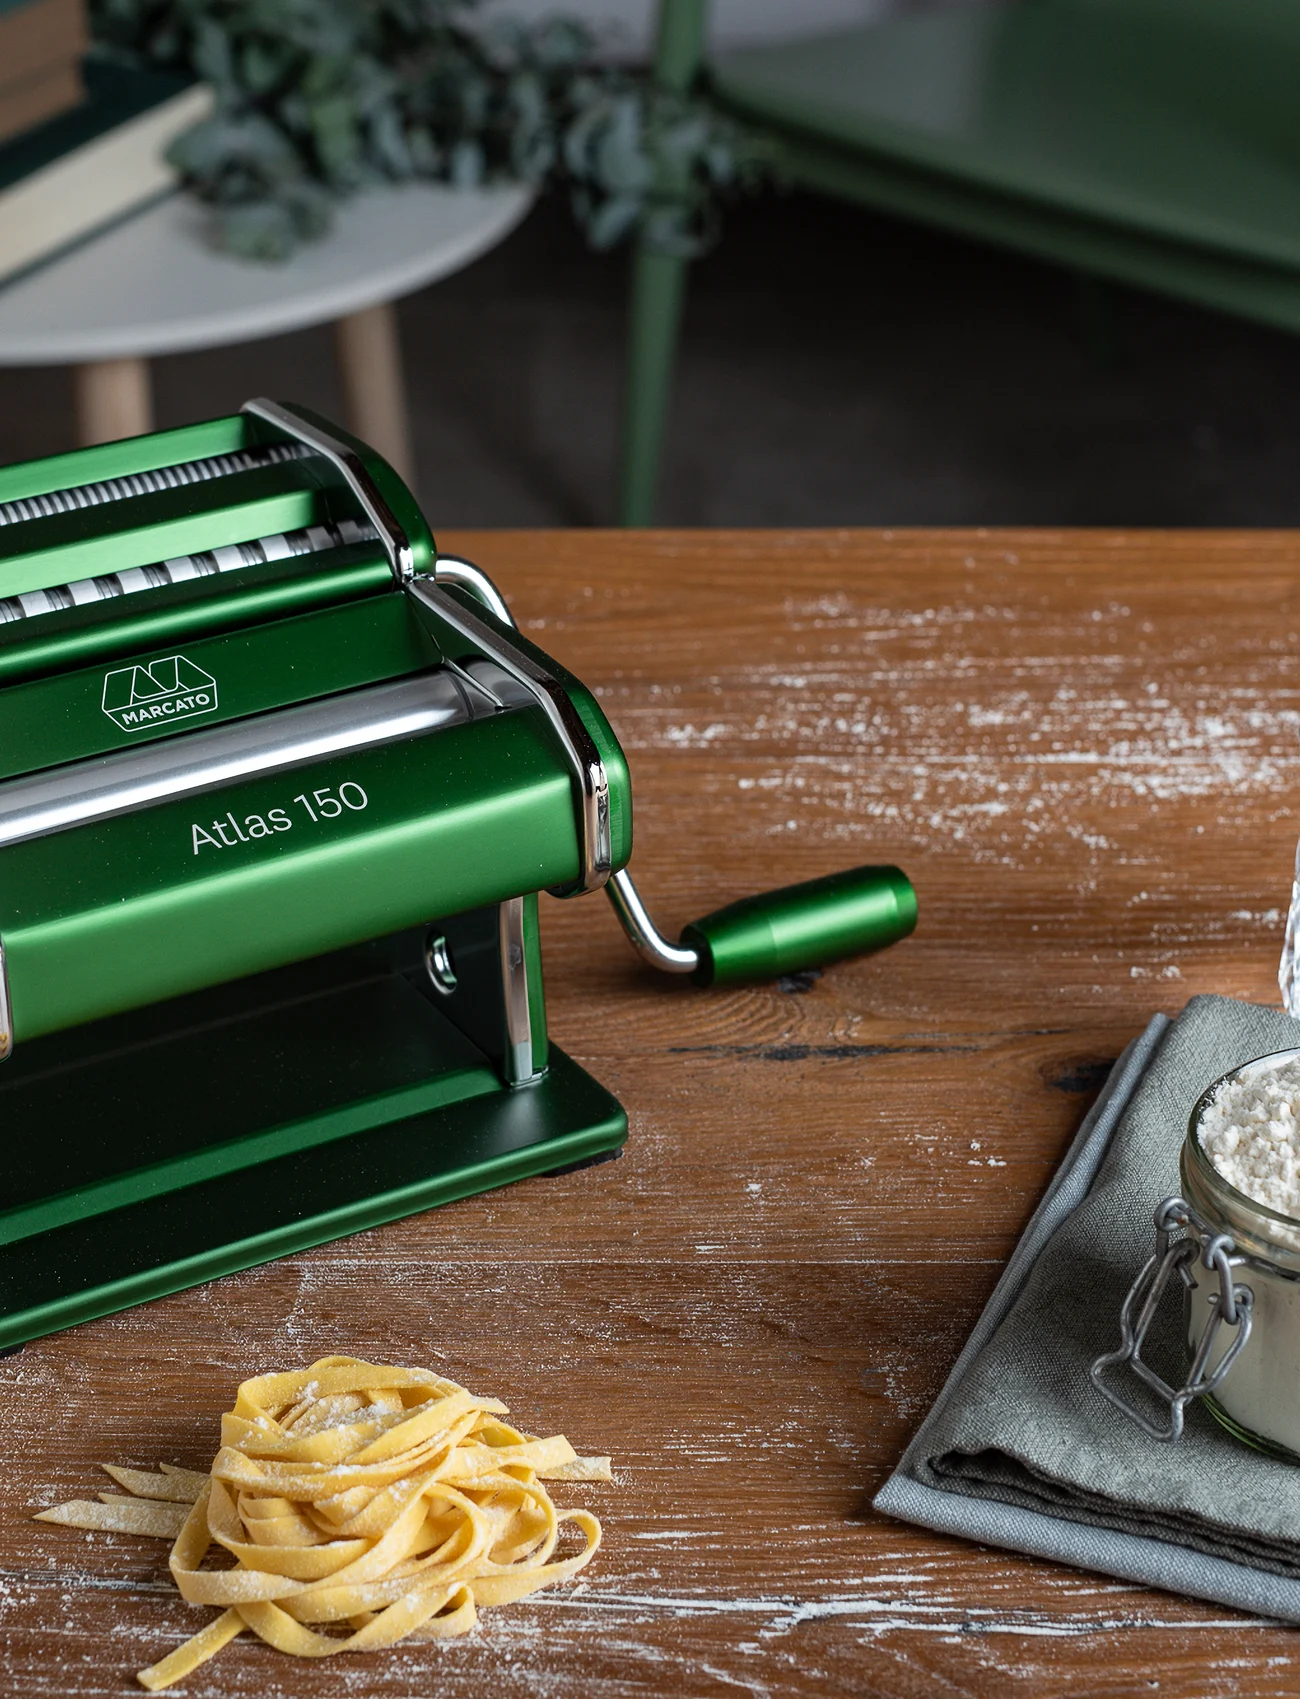 Marcato - Marcato pastamaskin Atlas 150 Design - pasta makers & accessories - green - 1